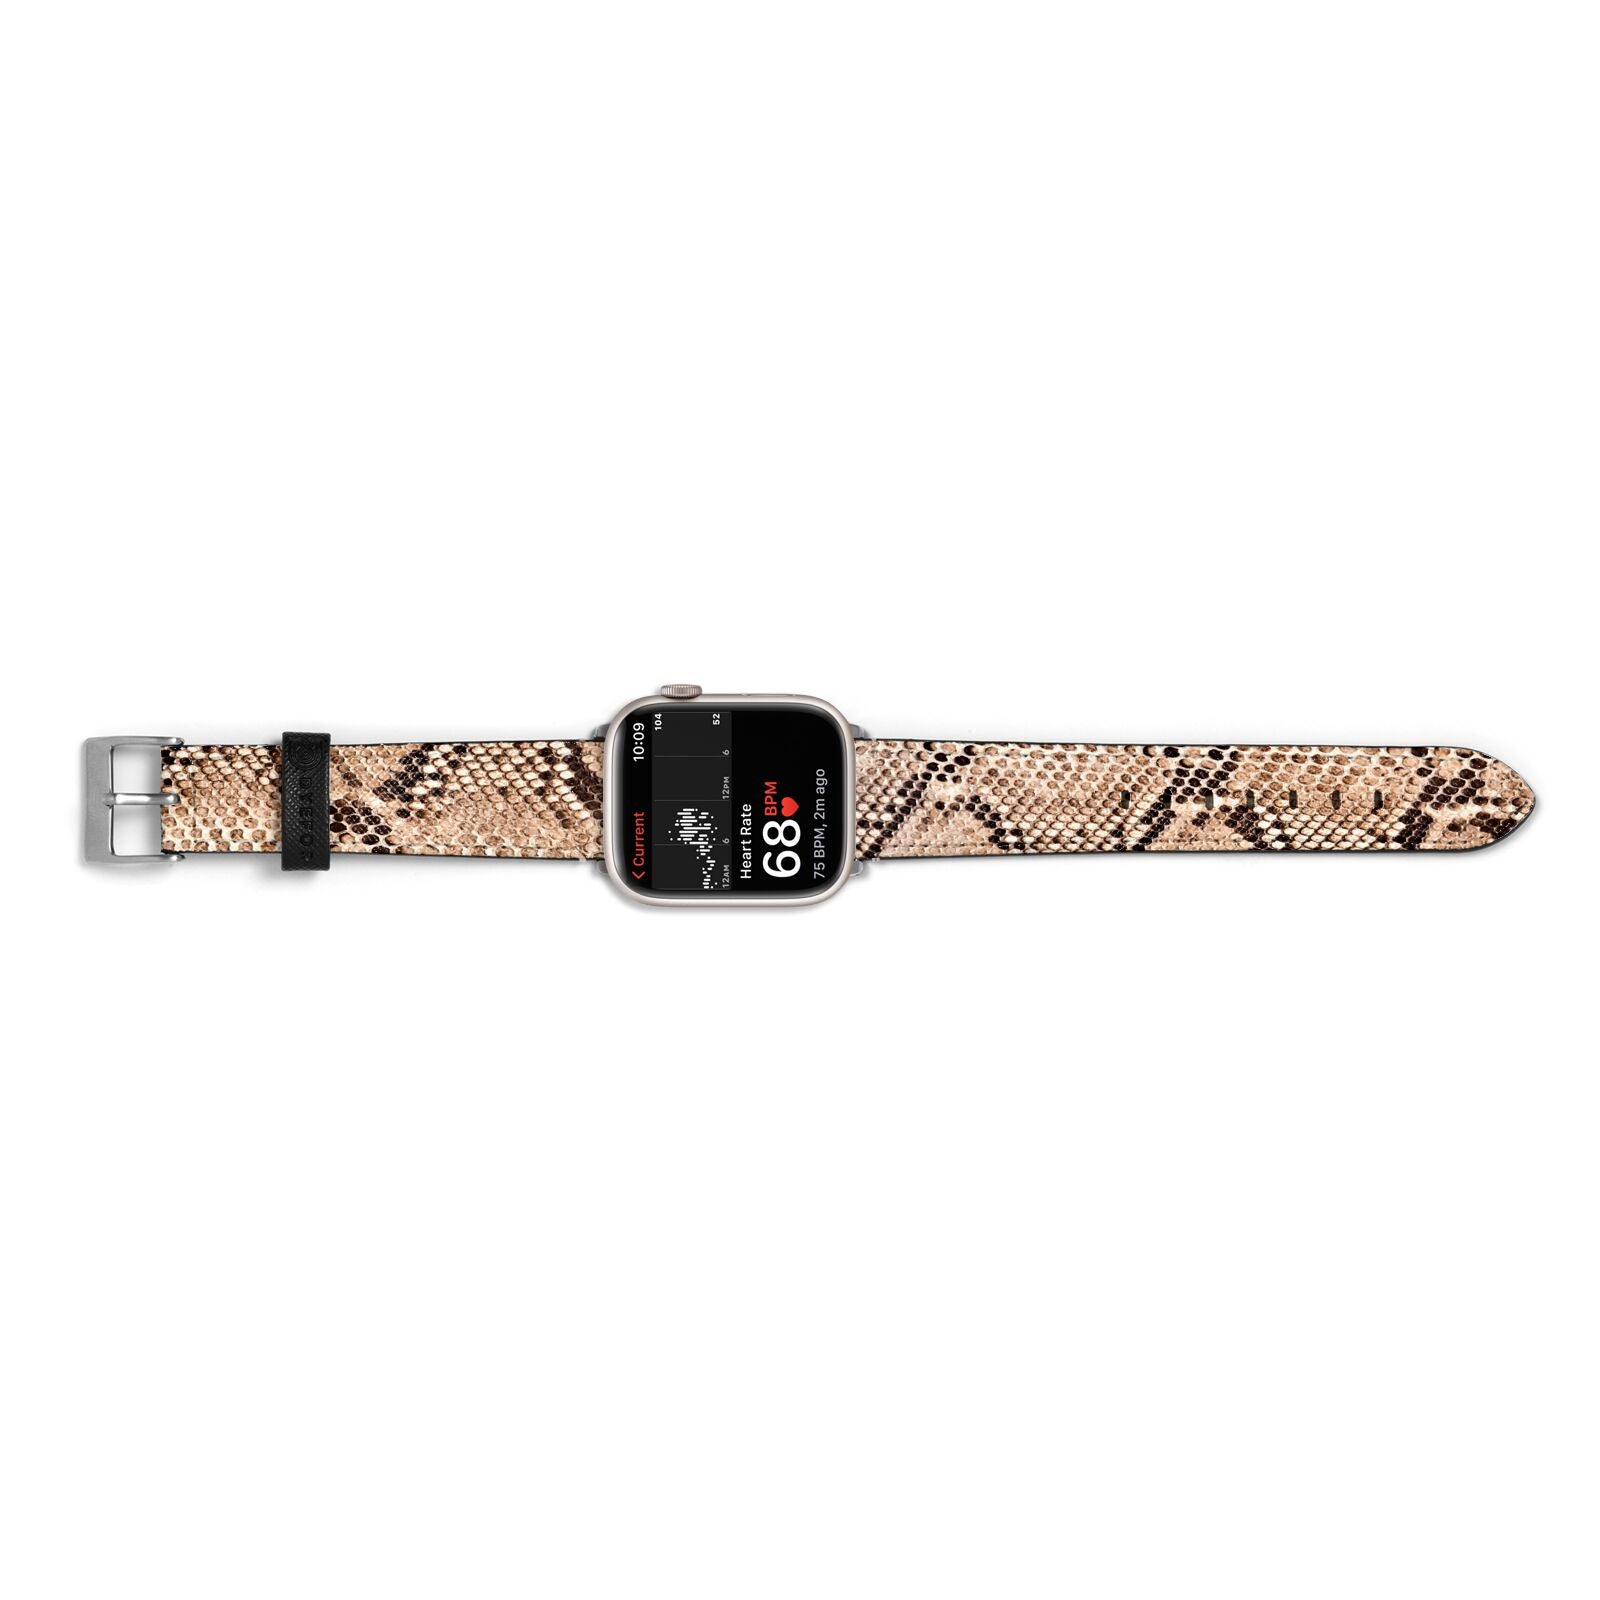 Snakeskin Apple Watch Strap Size 38mm Landscape Image Silver Hardware